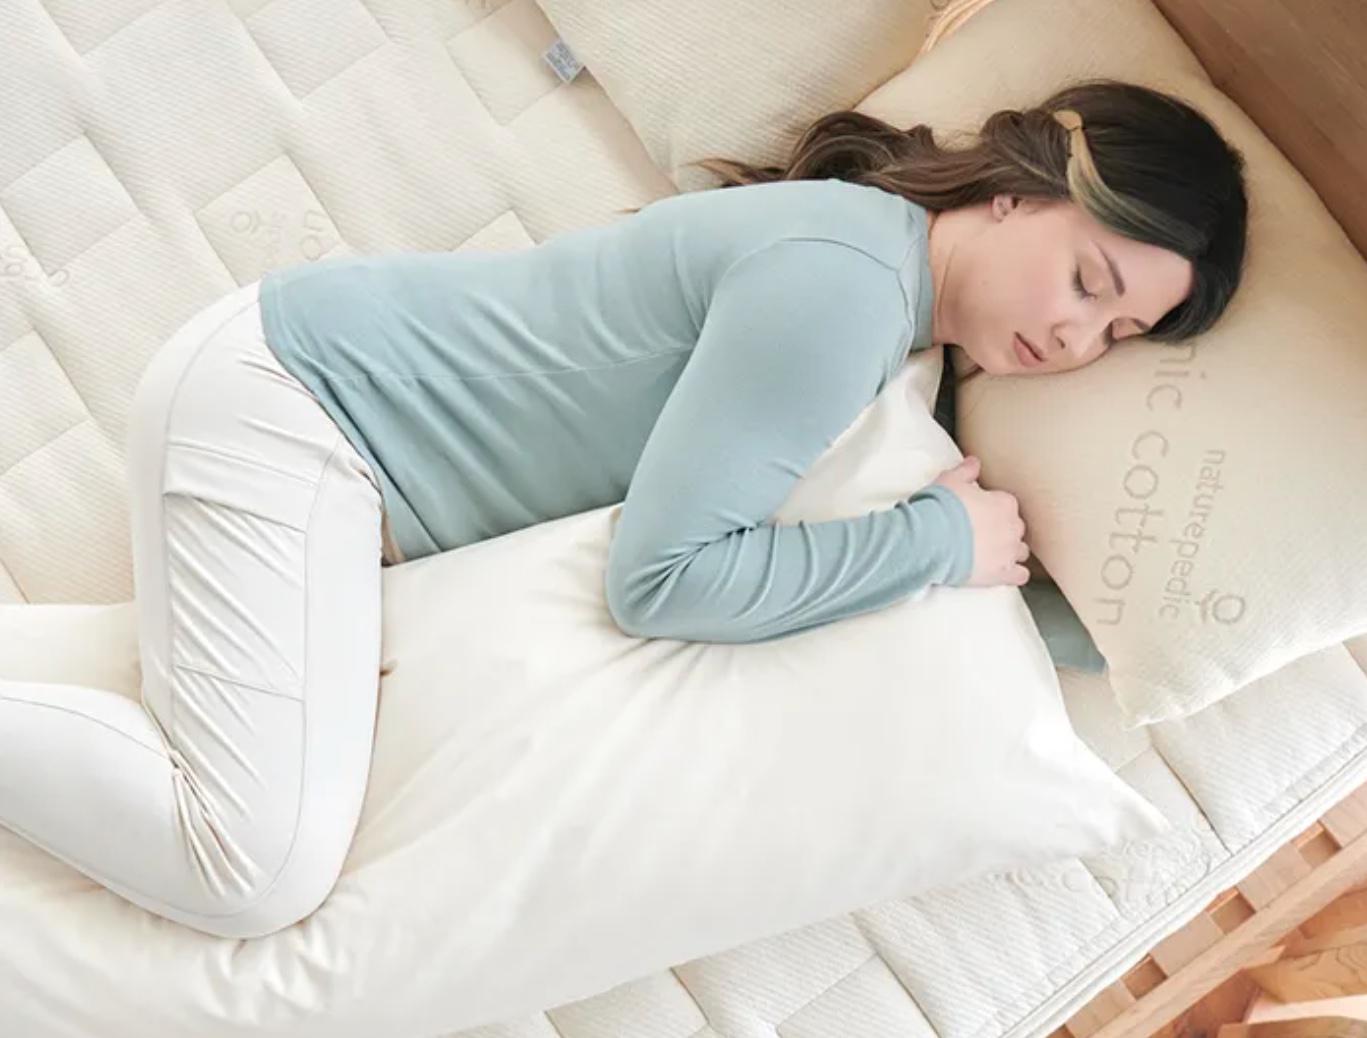 A woman hugs a body pillow.